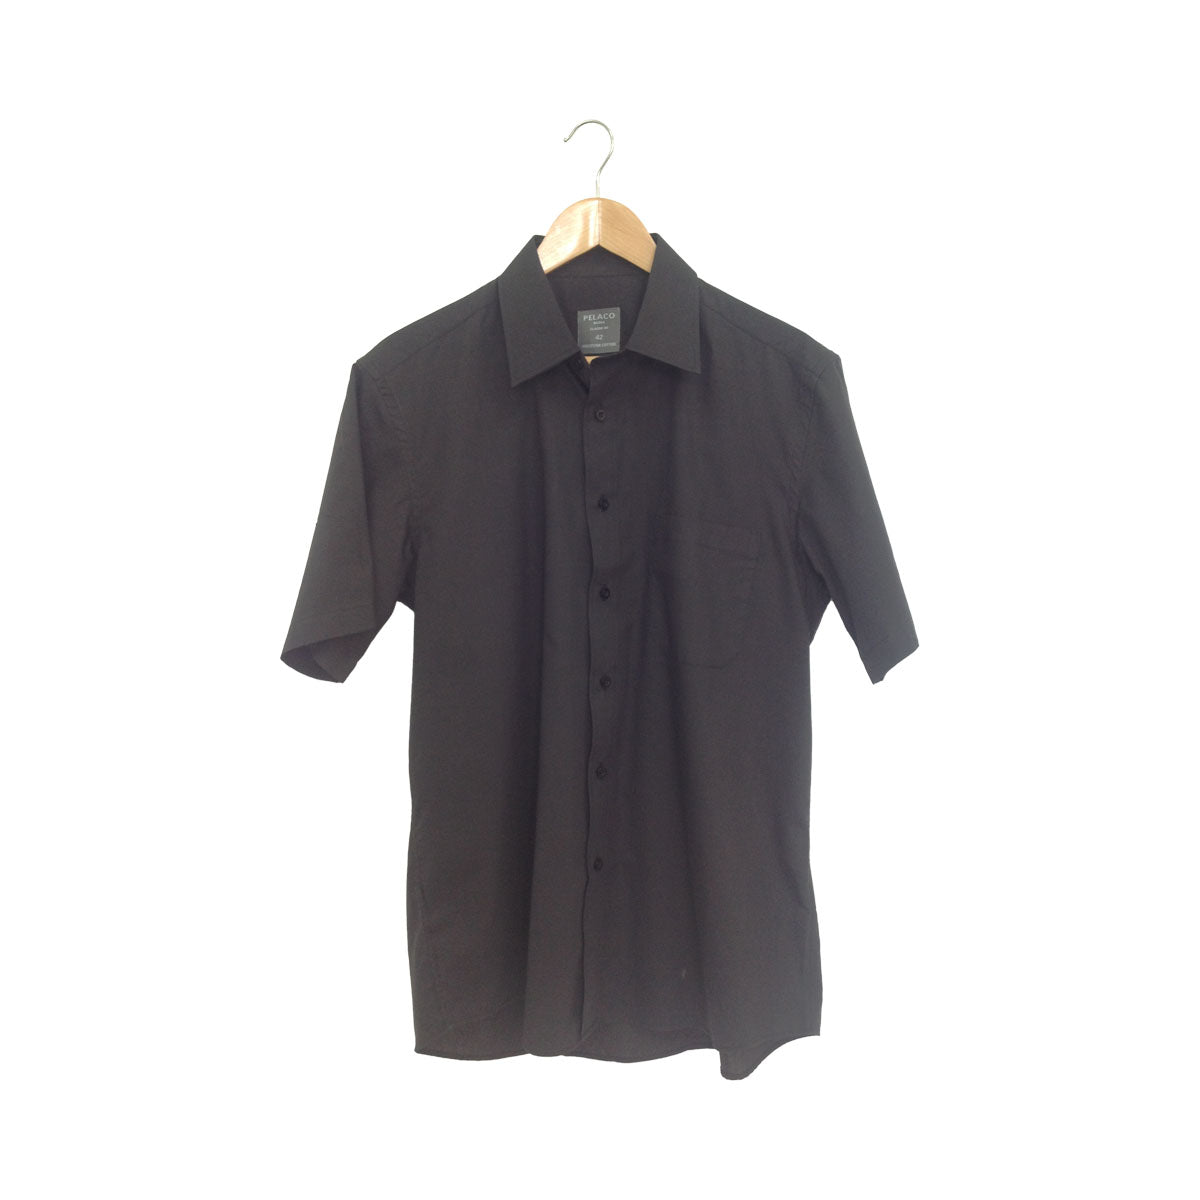 PELACO Short Sleeve Shirt - White and Black colours